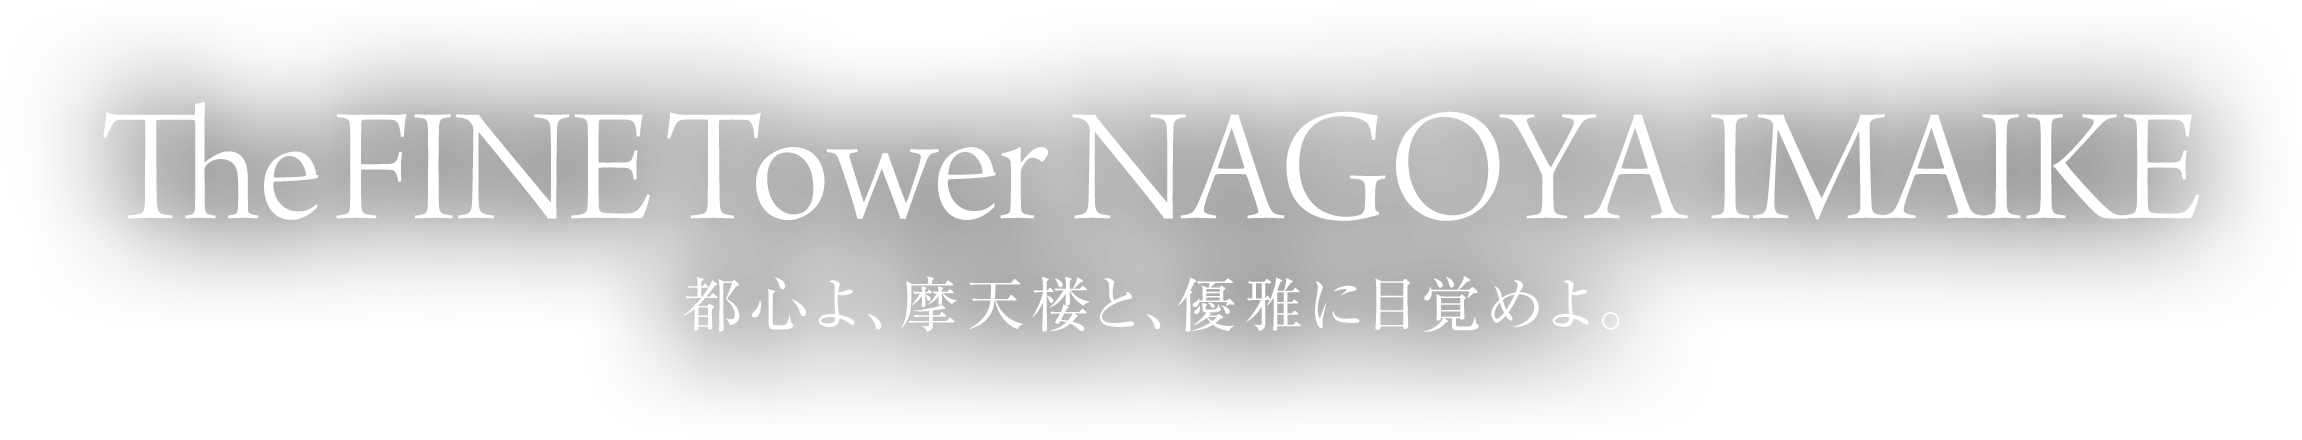 The FINE Tower NAGOYA IMAIKE